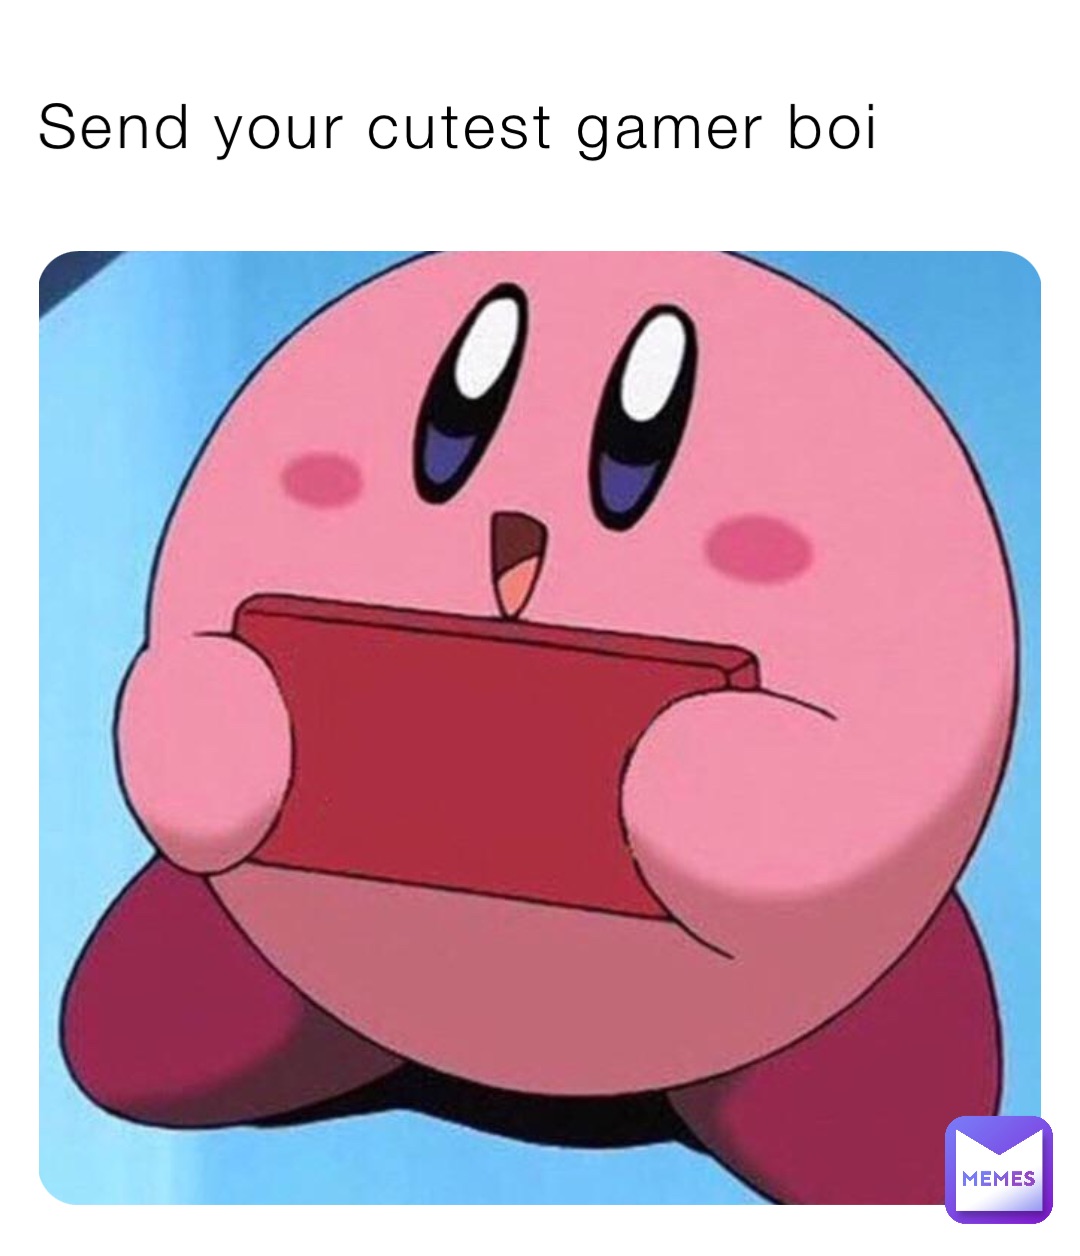 Send your cutest gamer boi